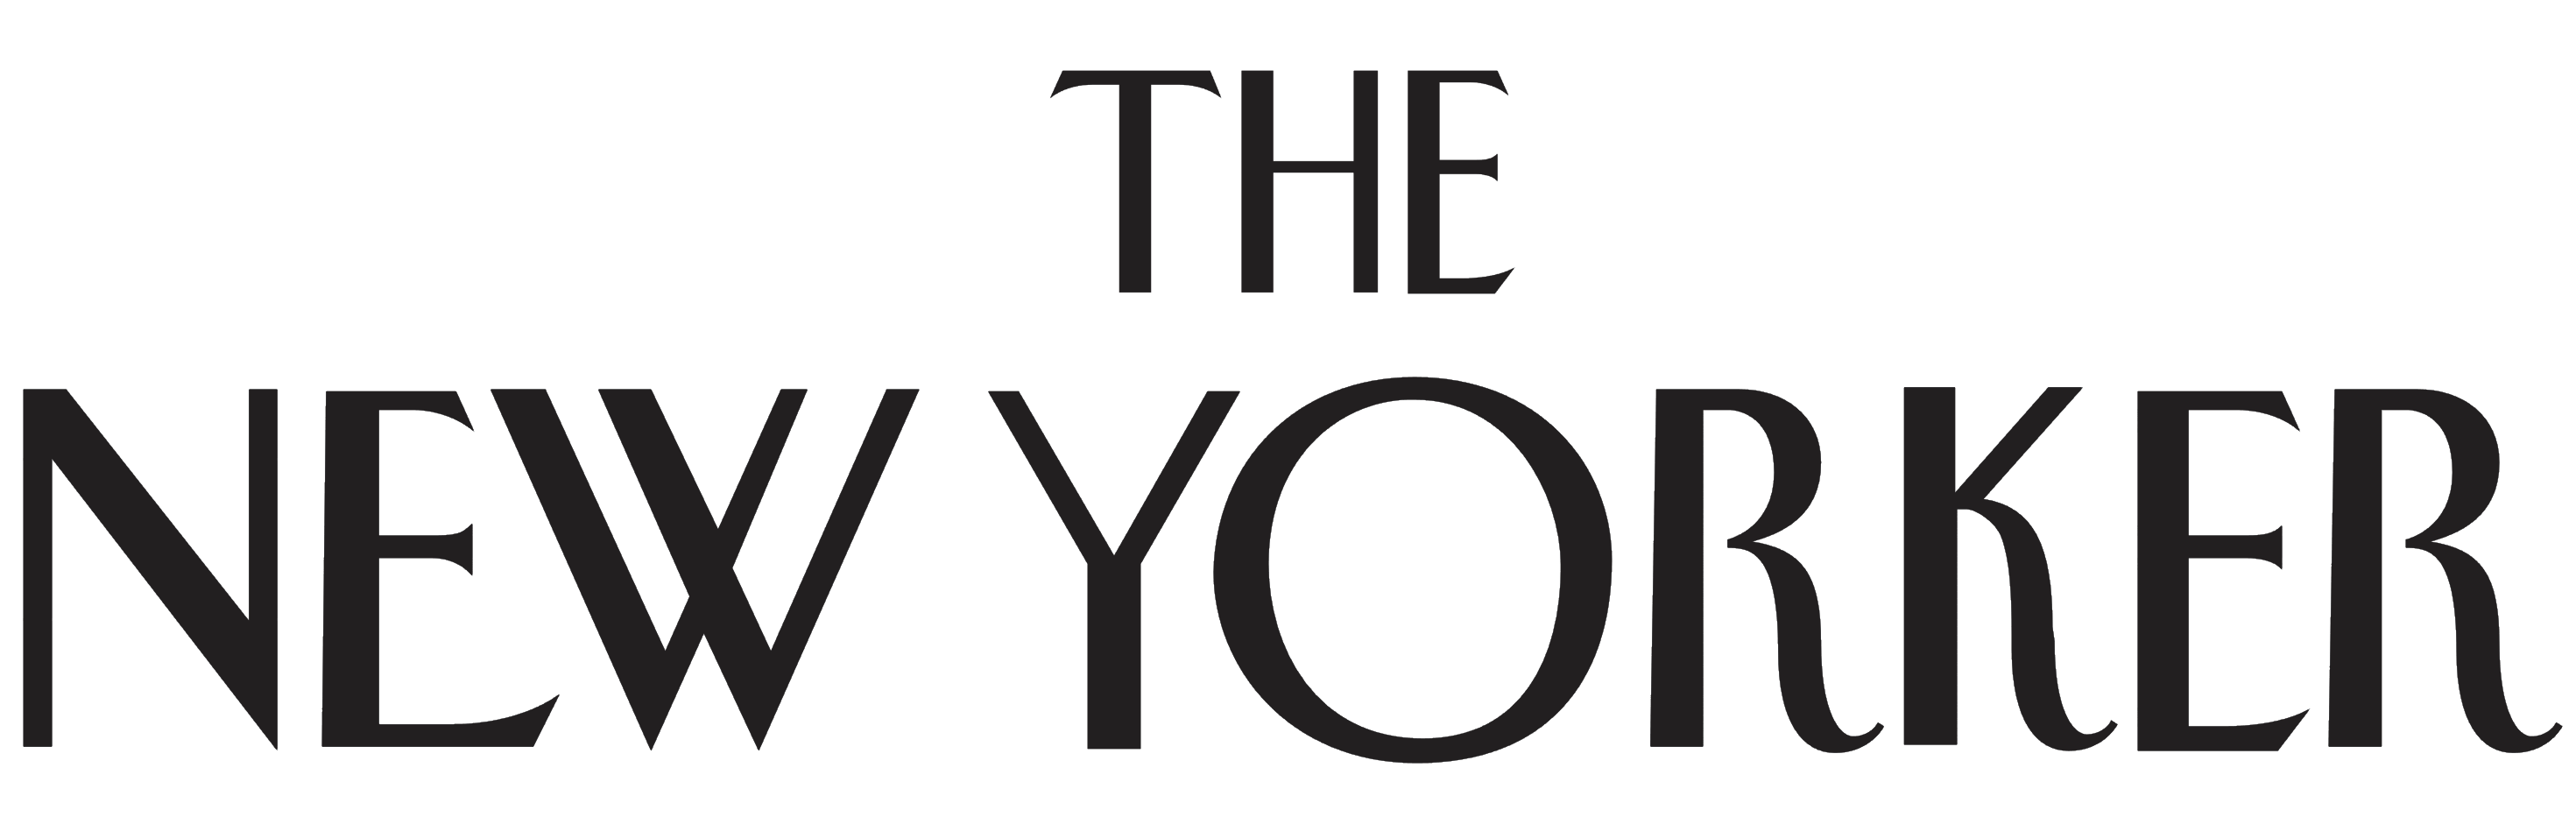 The hew yorker logo